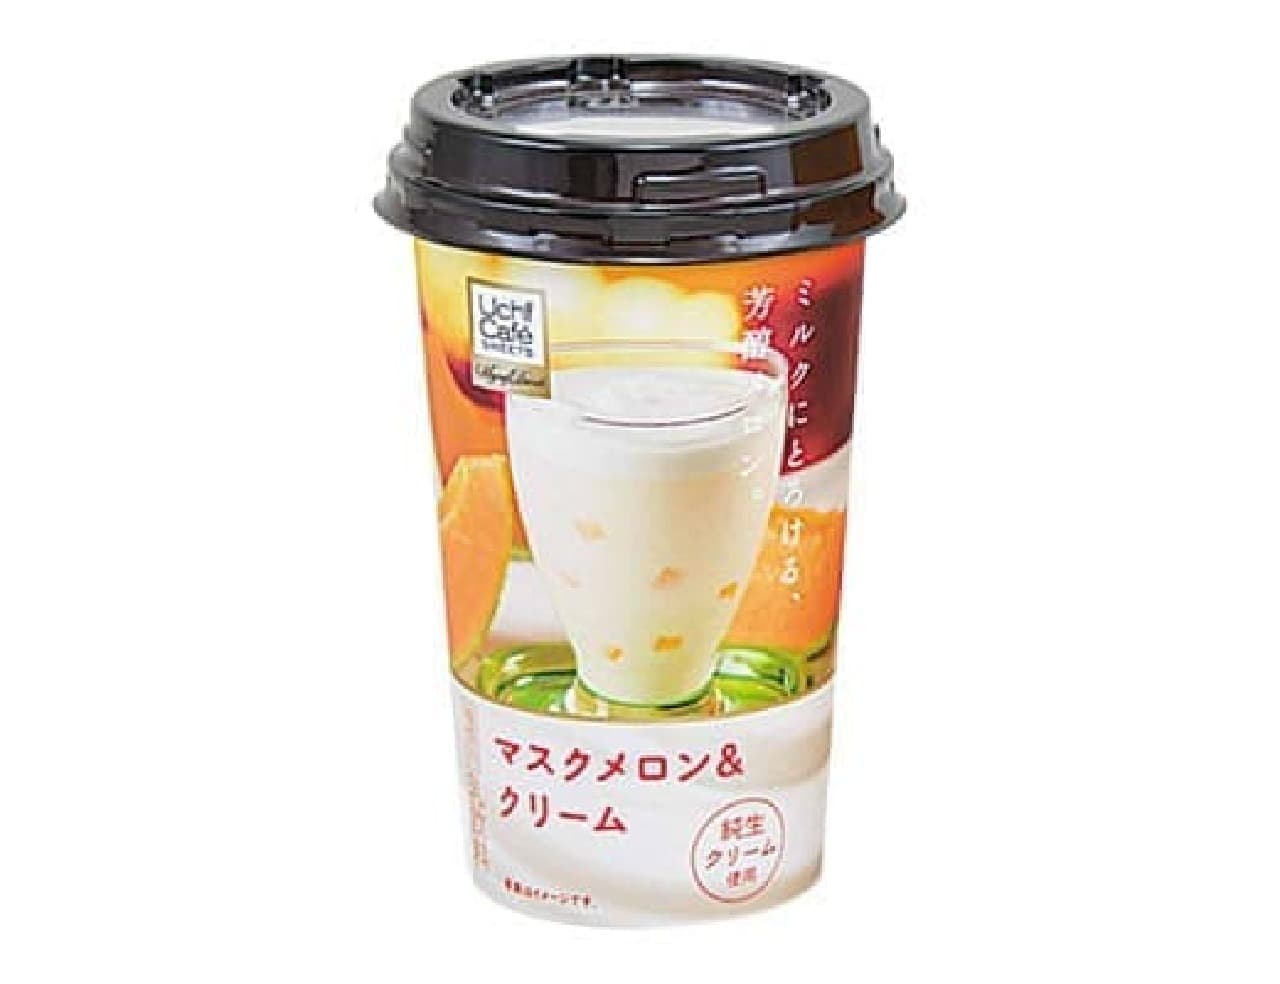 Lawson "Uchi Cafe Melon & Cream"